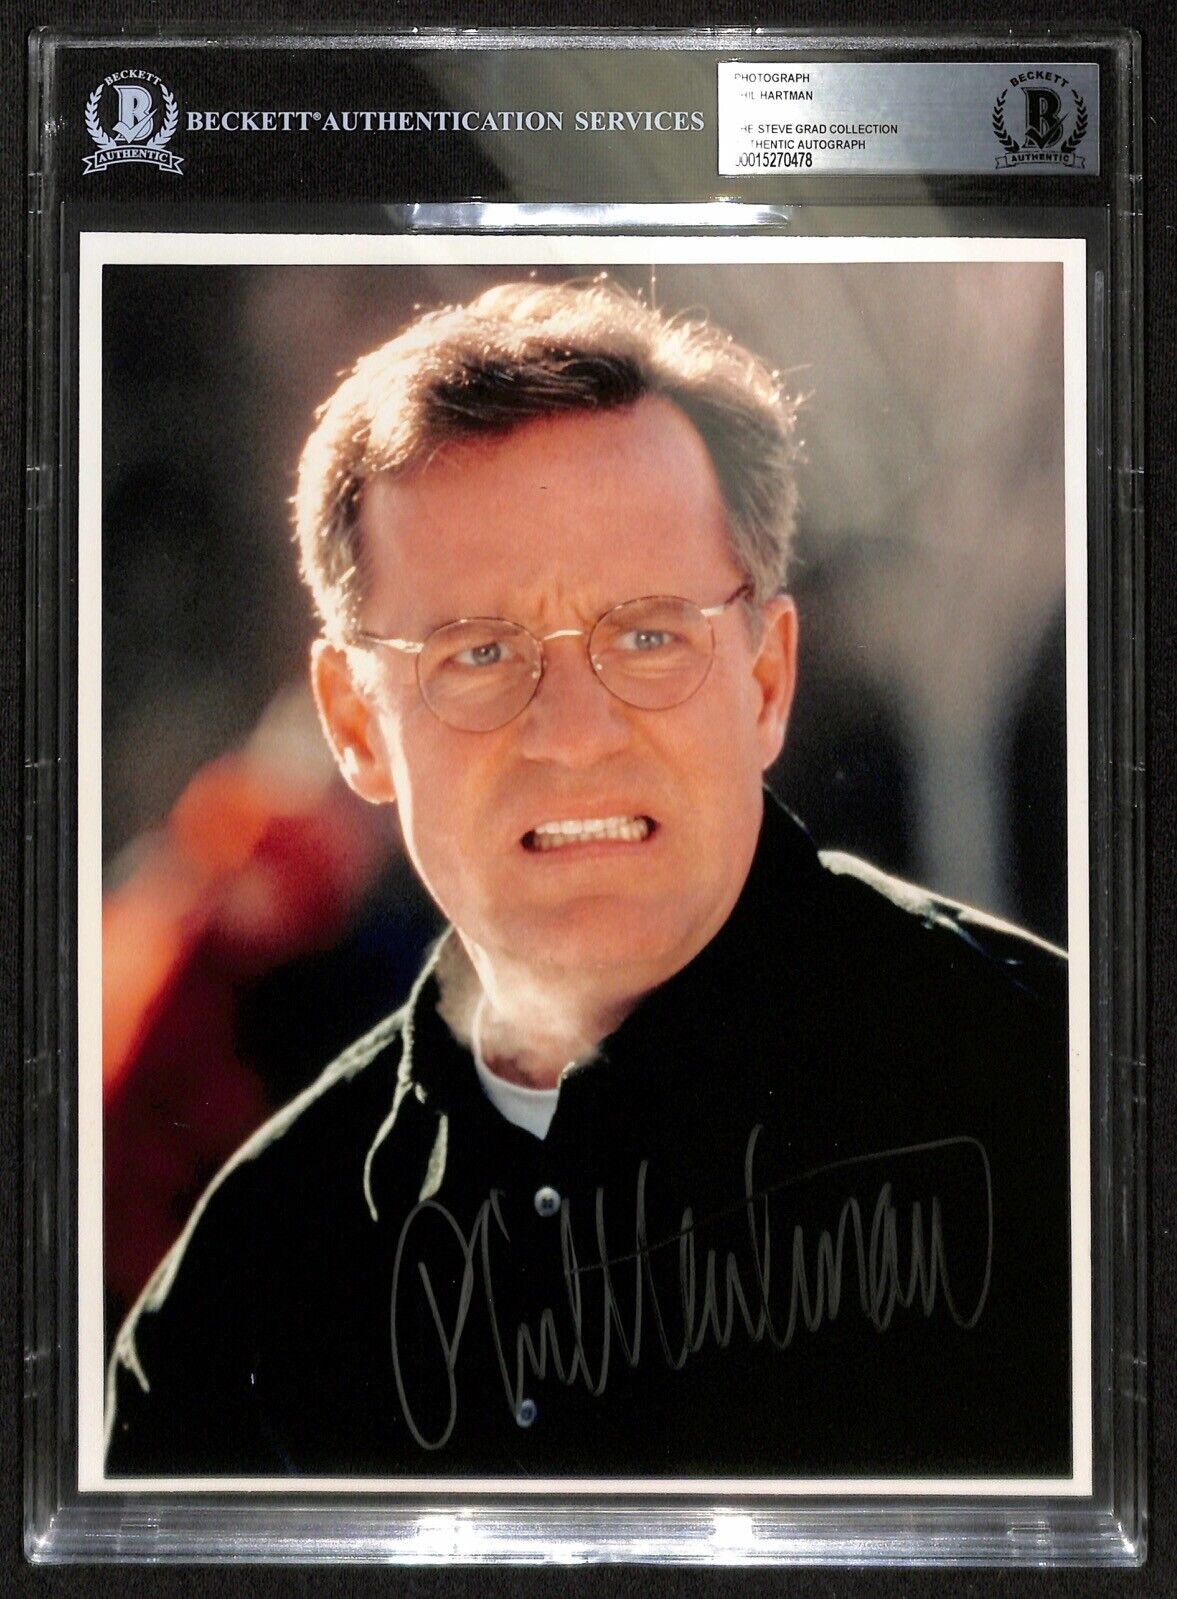 Phil Hartman SNL Signed 8x10 Photograph BAS (Grad Collection)